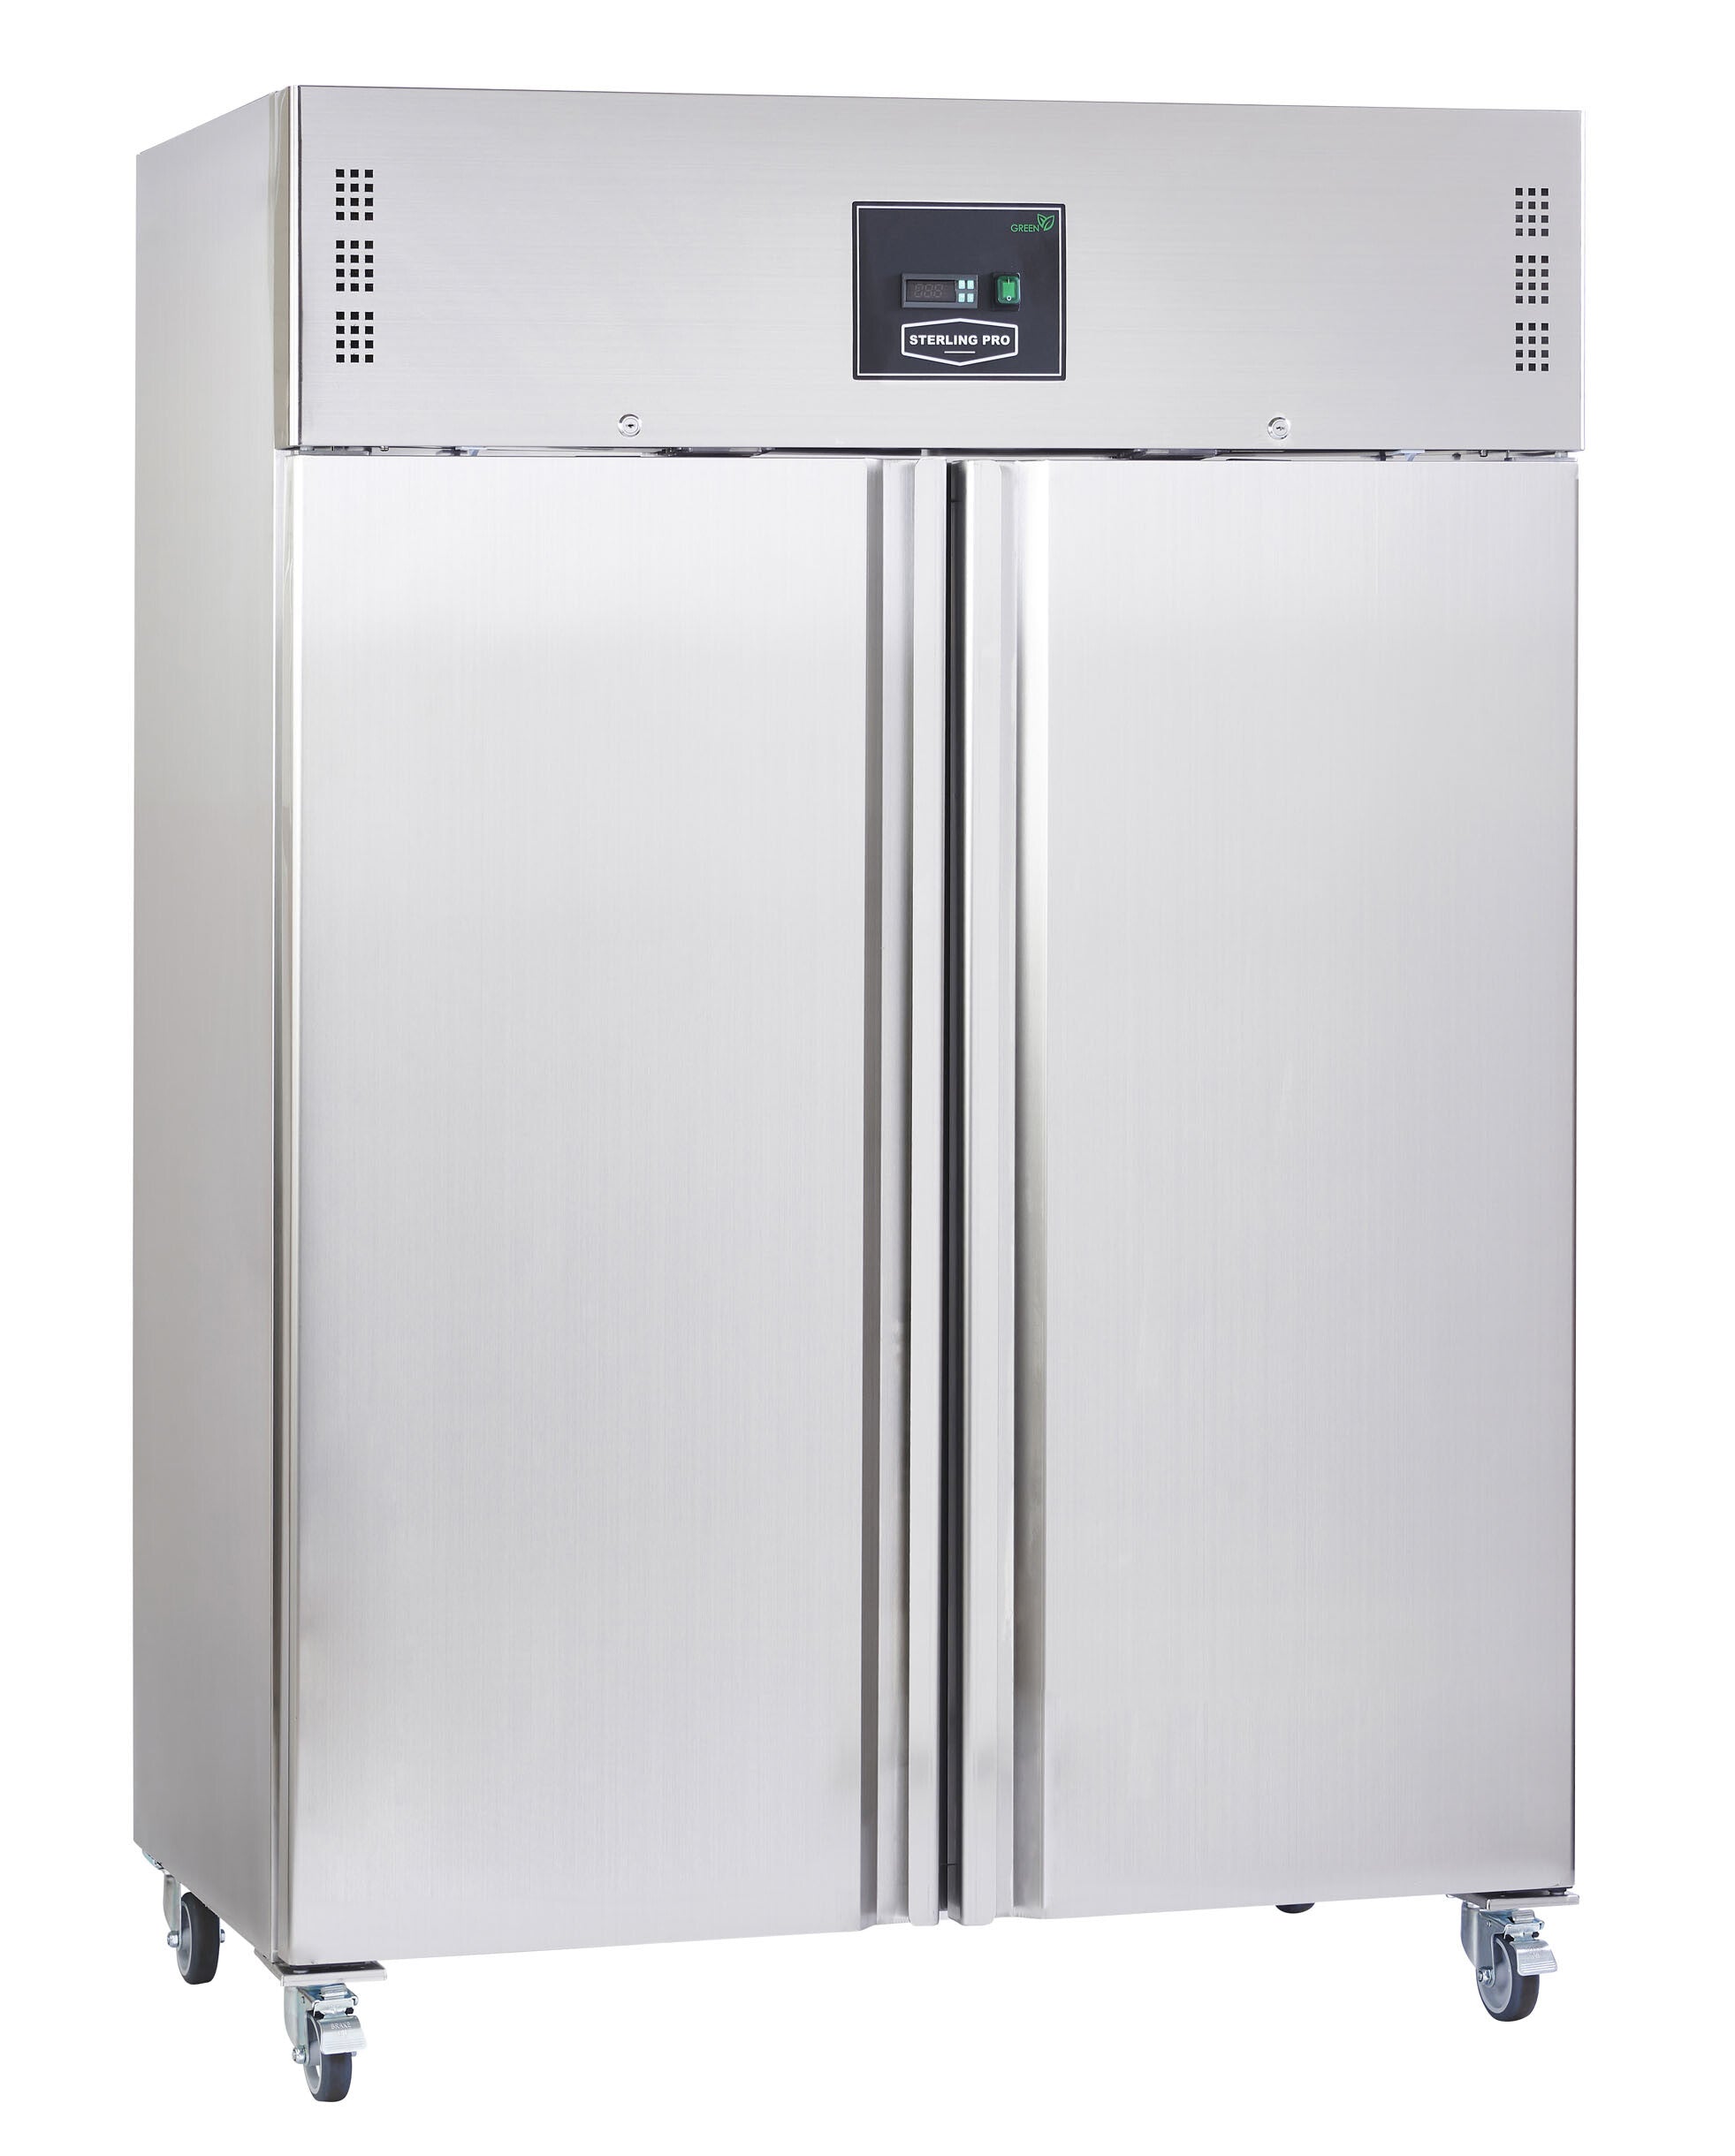 Sterling Pro Cobus SPR212PV Double Door Gastronorm Refrigerator 1200 Litres